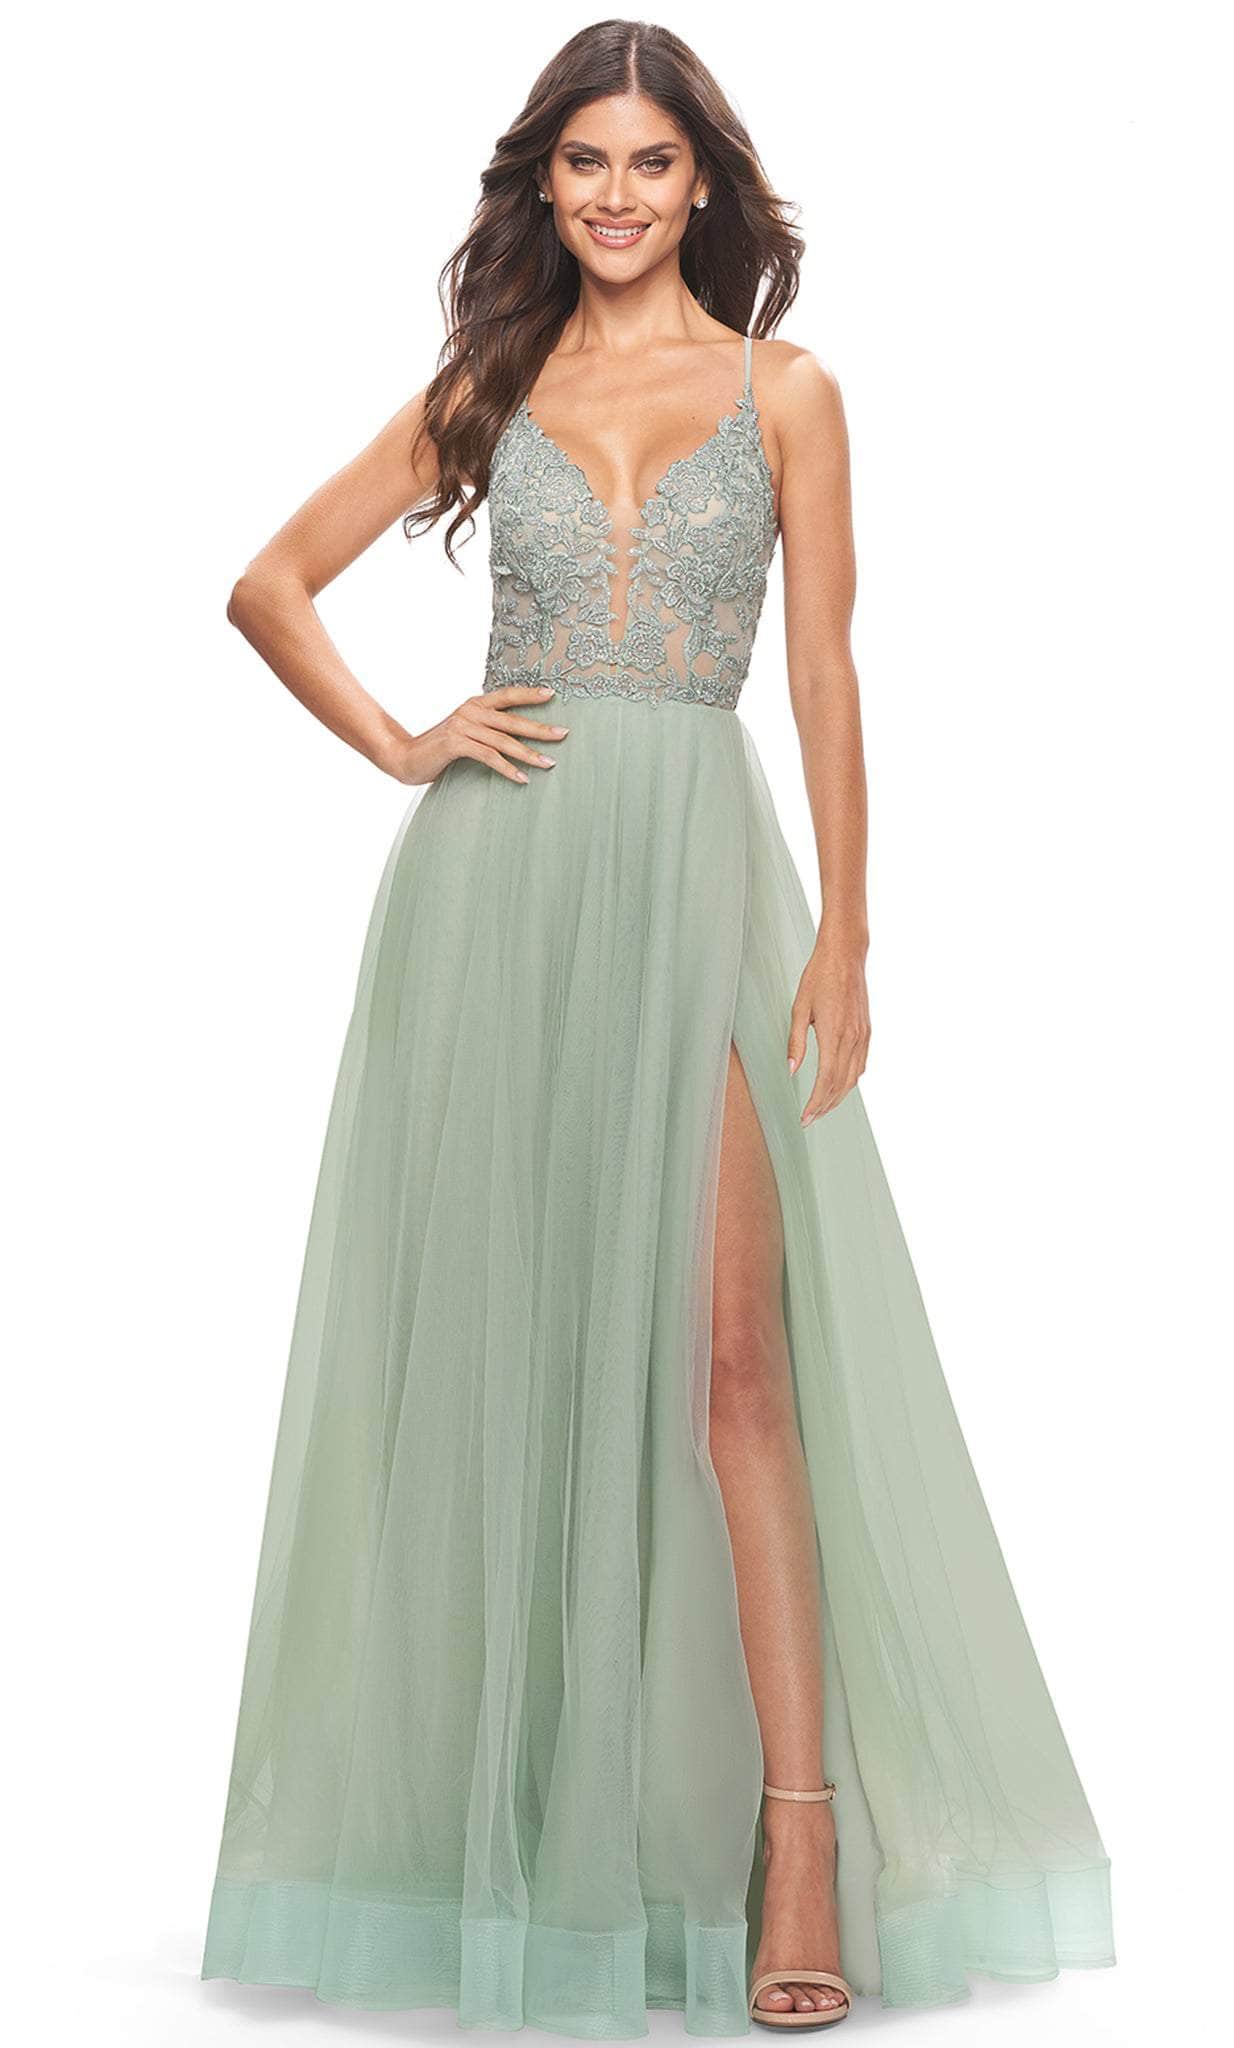 La Femme 31542 - V-Neck Lace Applique Prom Dress Special Occasion Dresses 00 / Sage